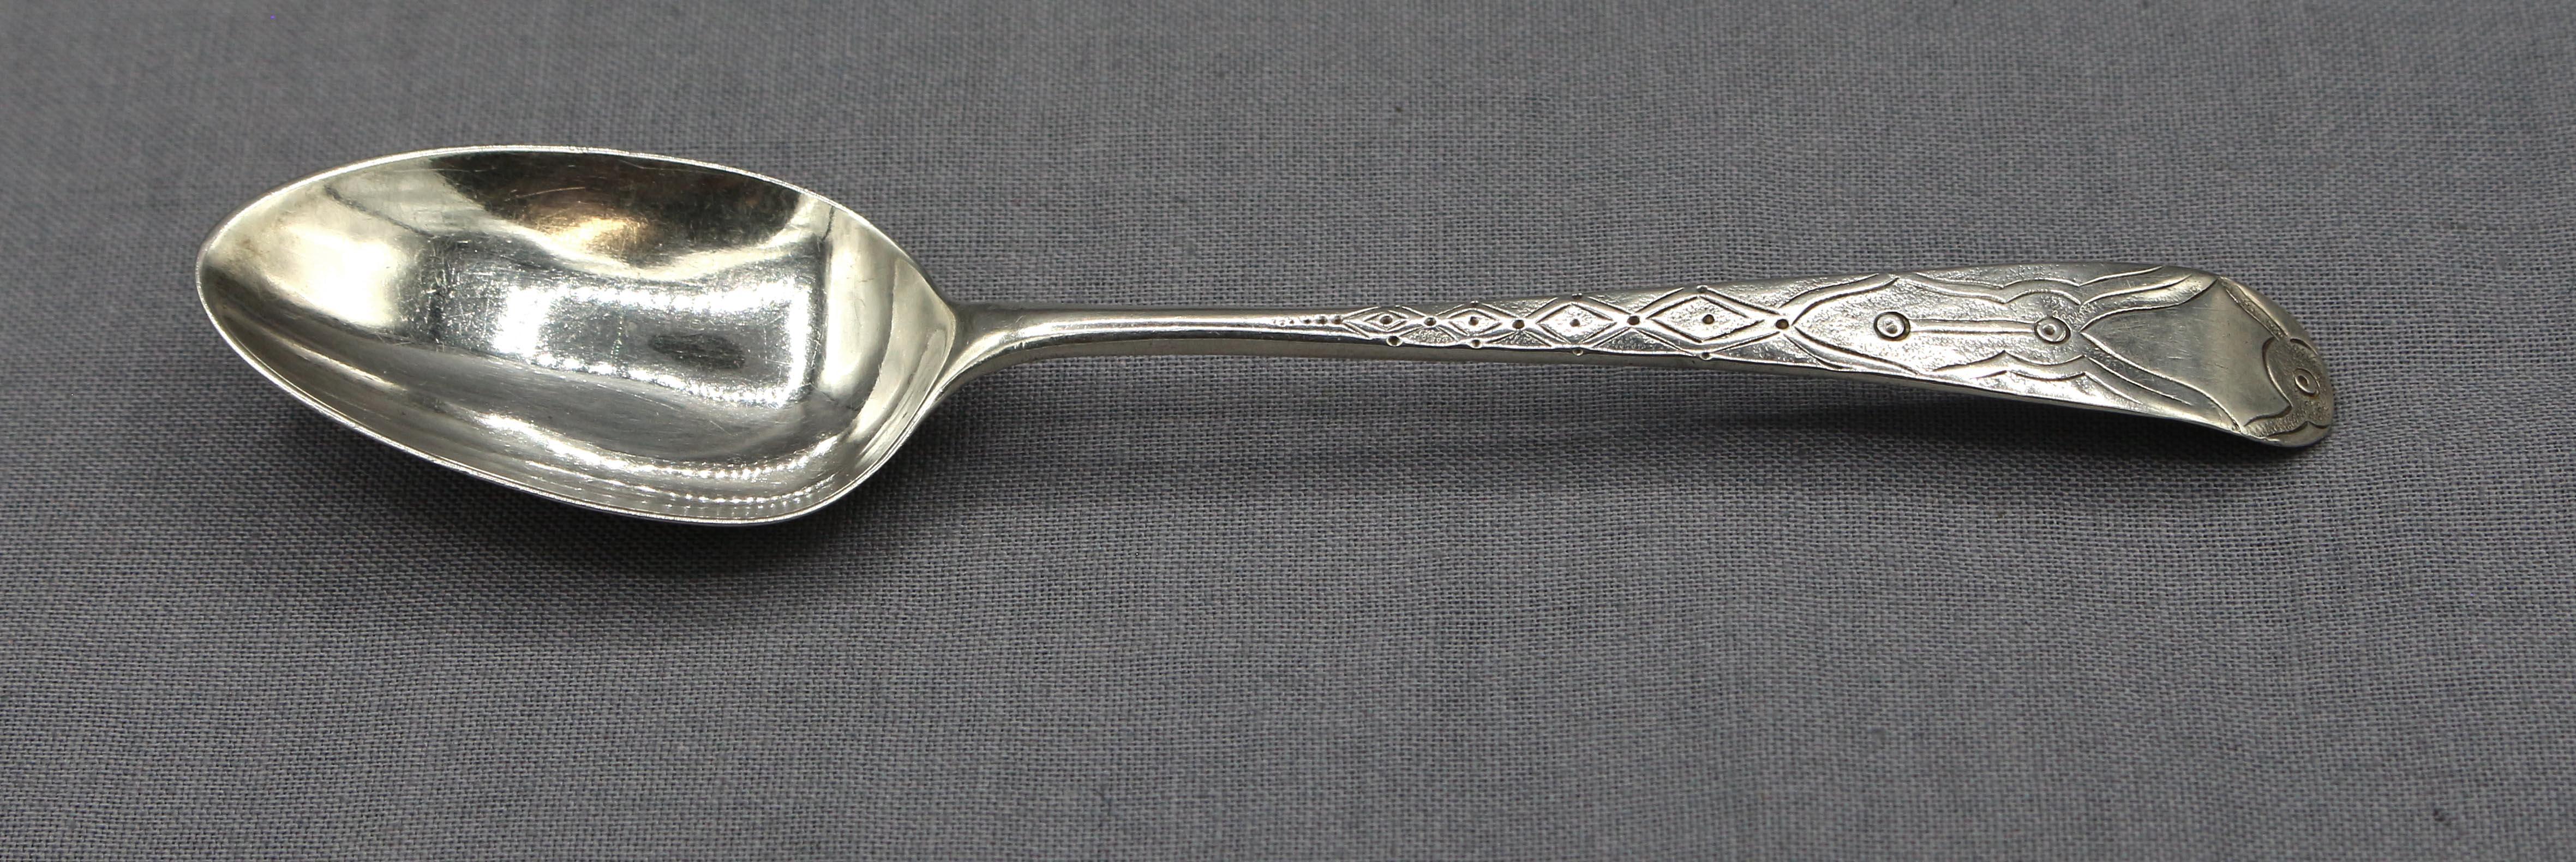 Georgian Set of 4 Sterling Silver Coffee Spoons by Hester Bateman, London, c.1775 For Sale